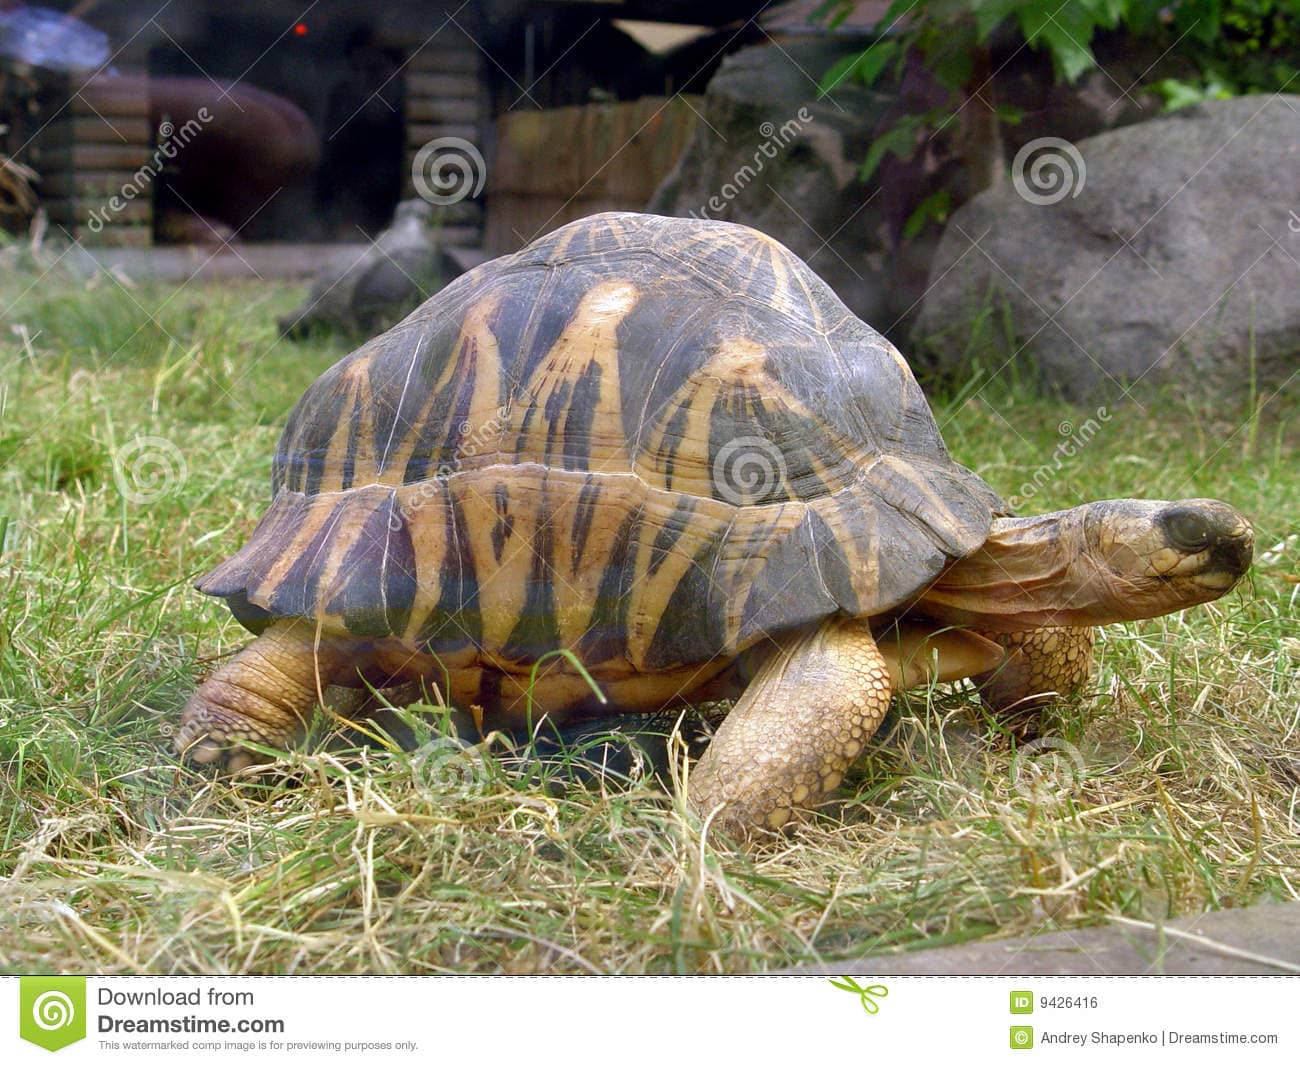 big-turtle-9426416